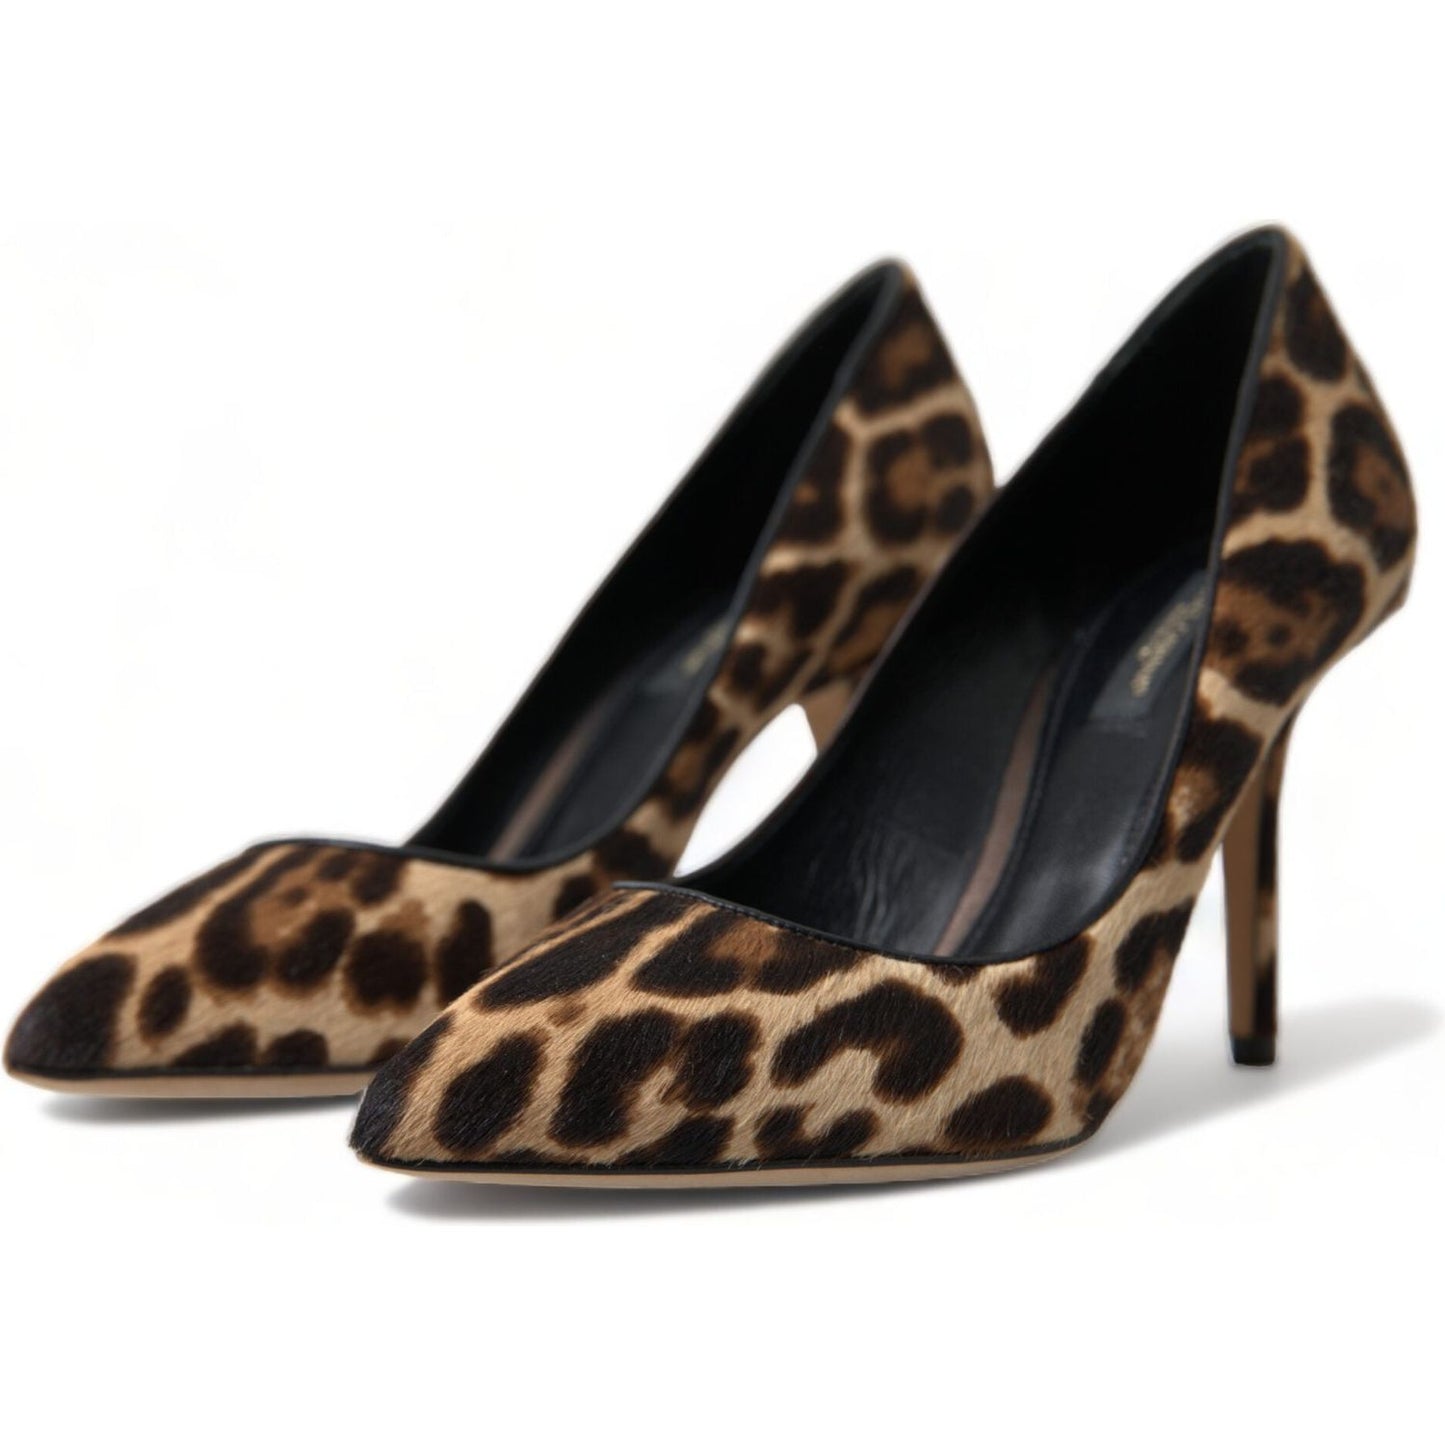 Dolce & Gabbana Exquisite Leopard Print Stiletto Pumps exquisite-leopard-print-stiletto-pumps